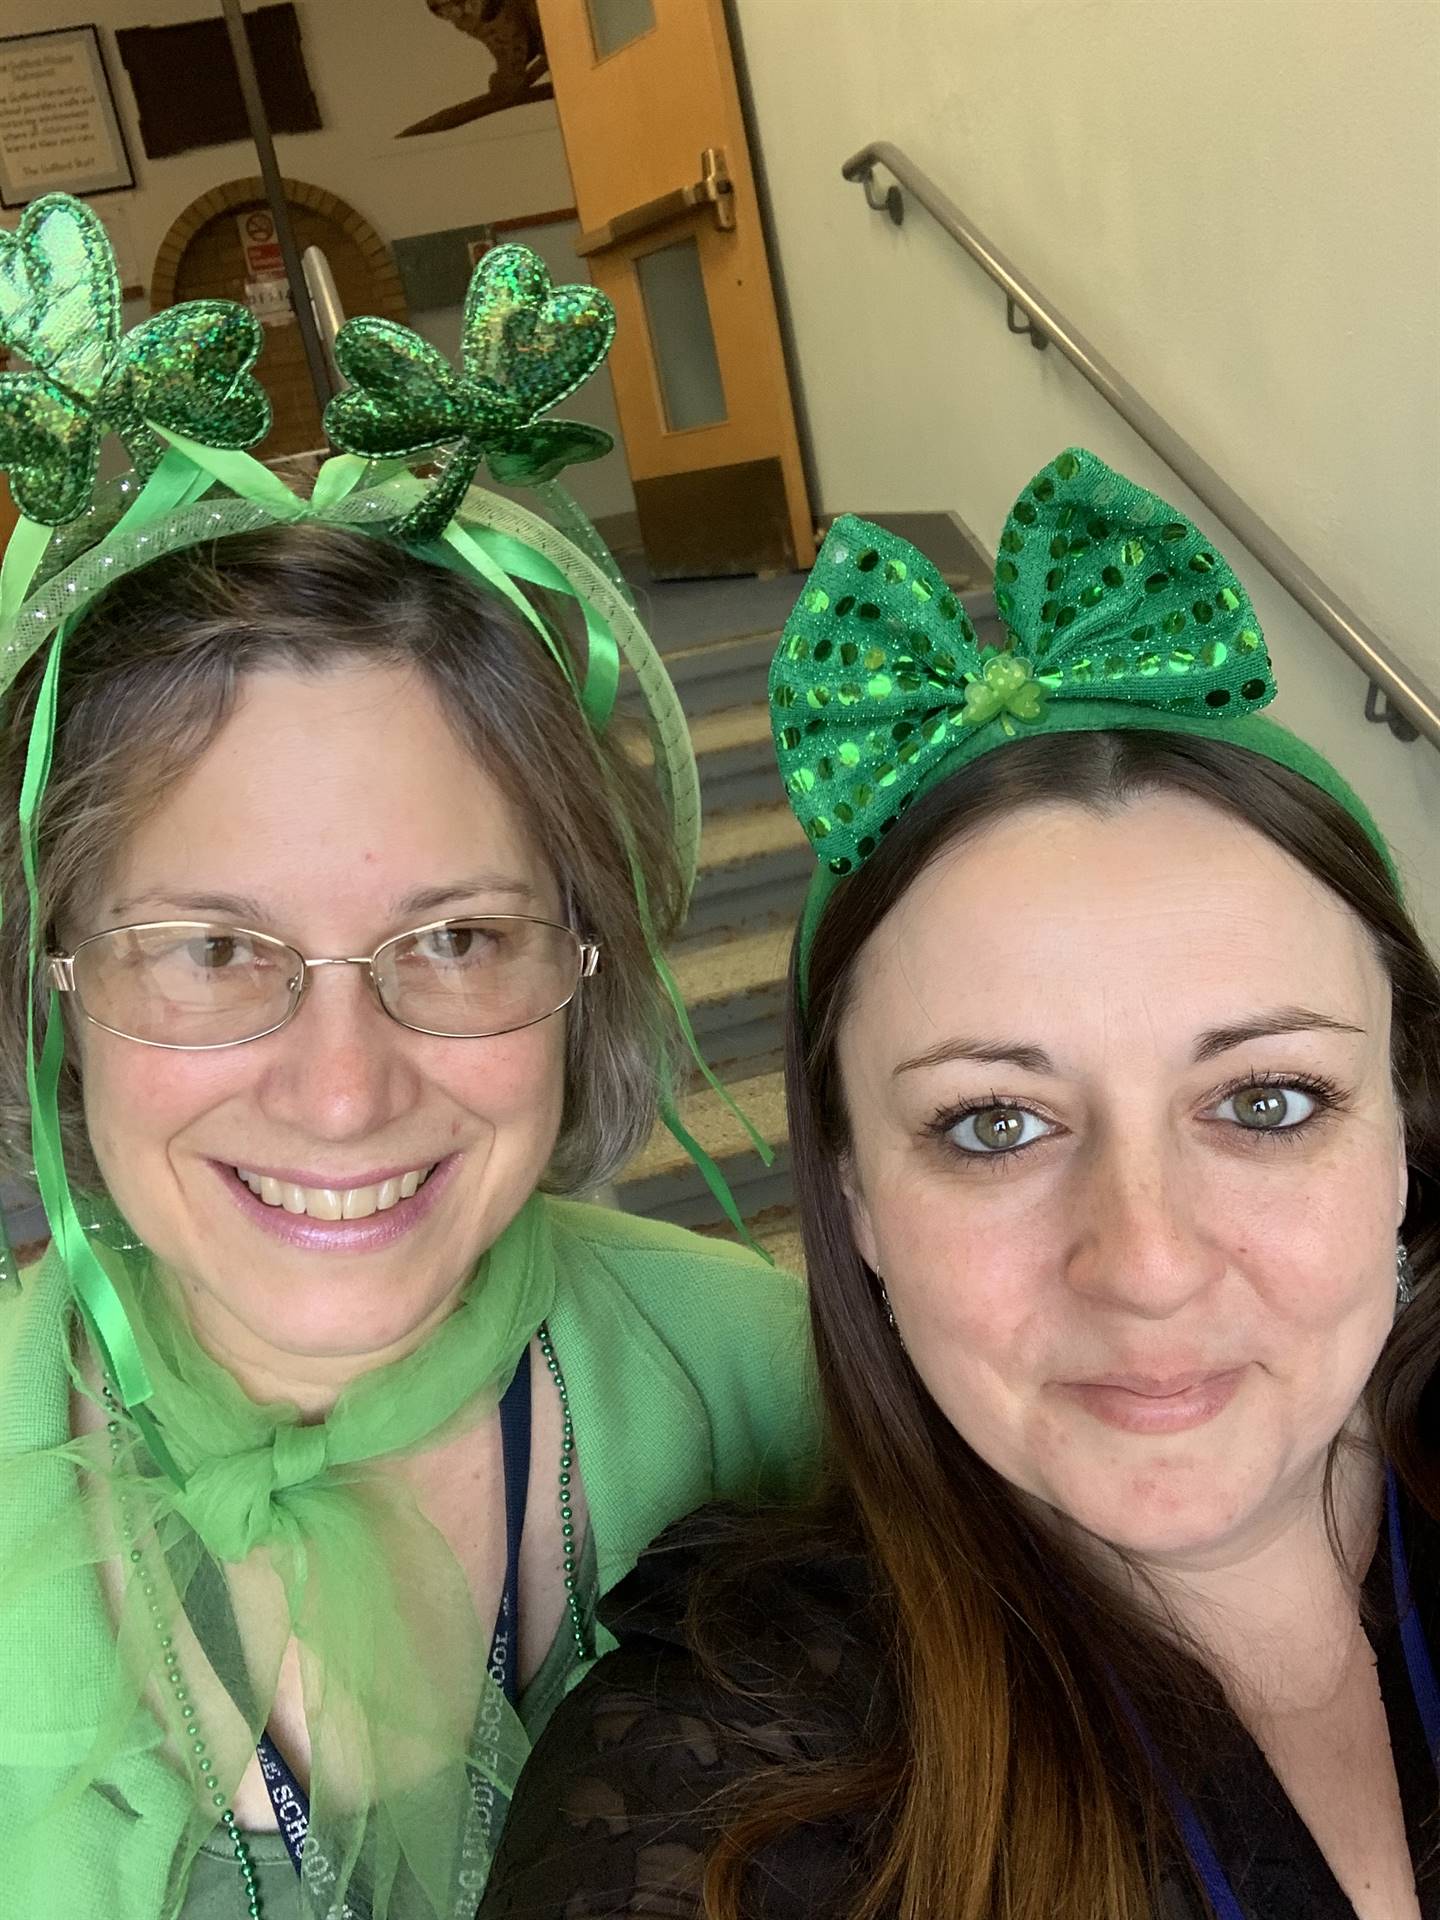 2 staff members with green headbands.